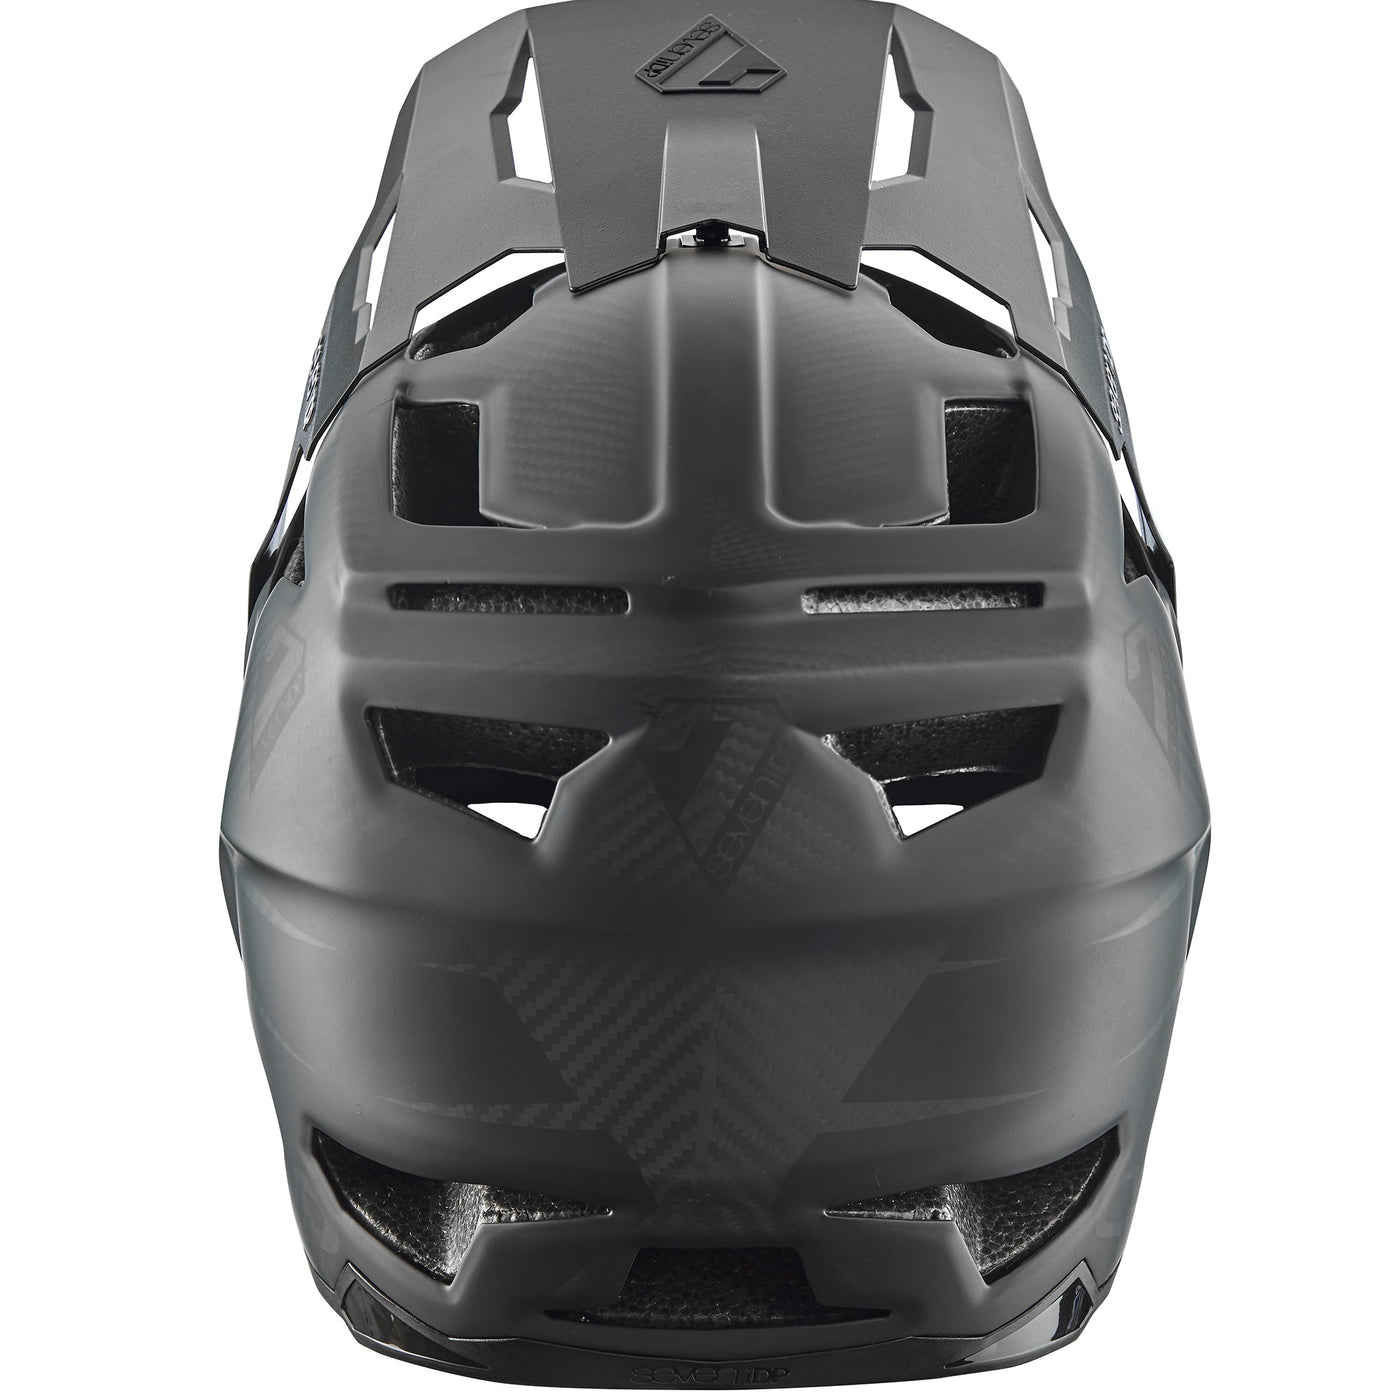 7iDP Project 23 Carbon Helmet